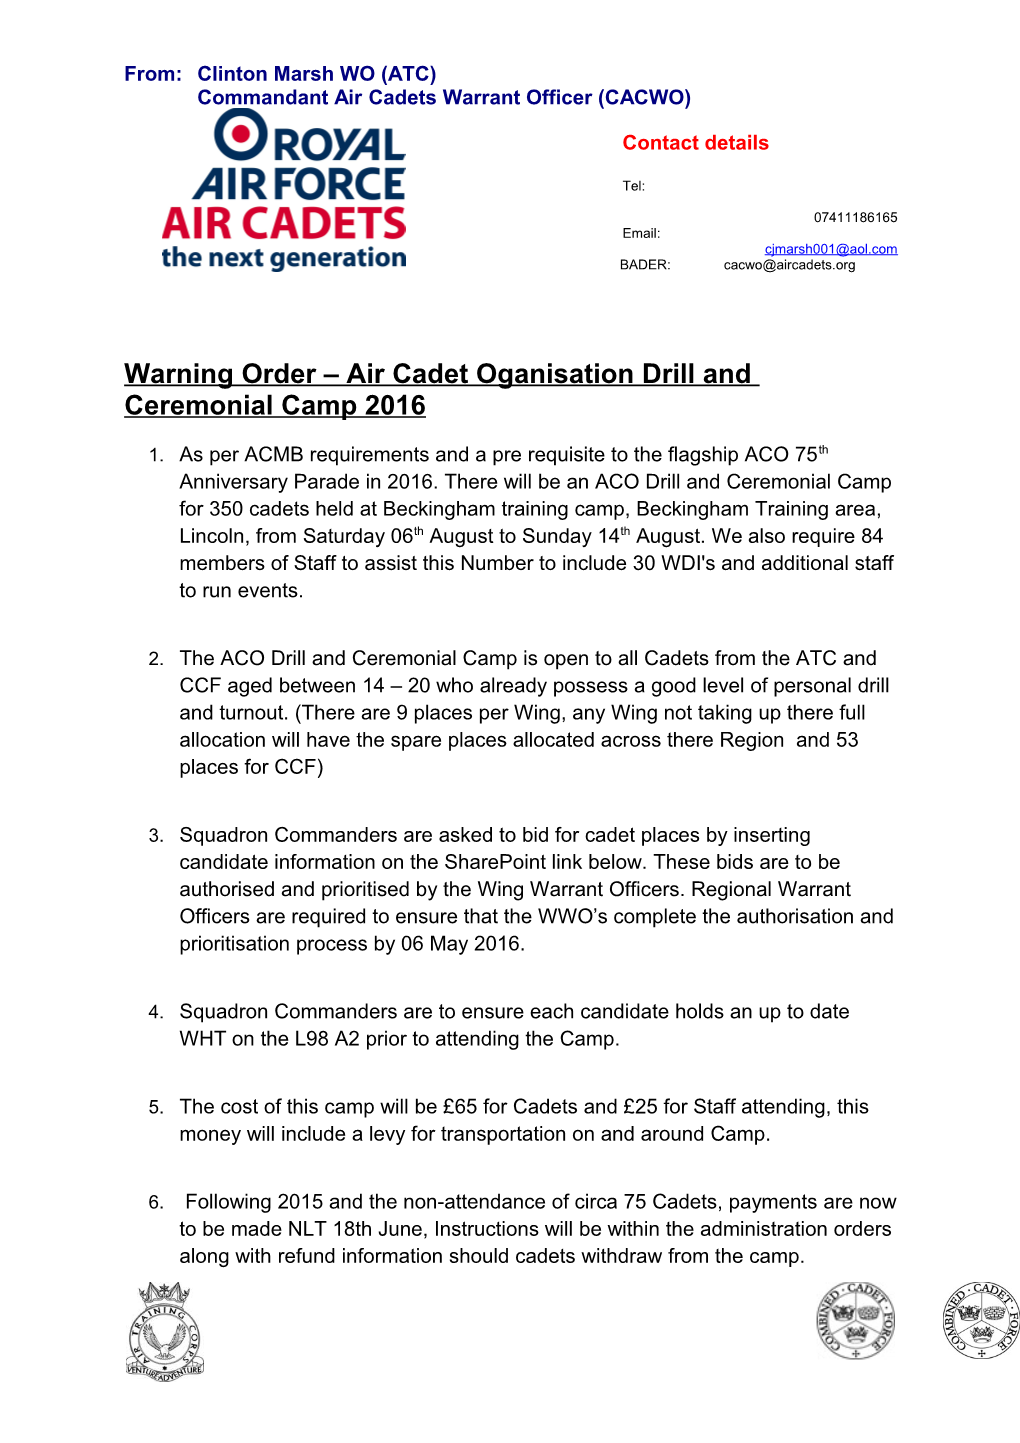 Warning Order Air Cadet Oganisation Drill and Ceremonial Camp 2016